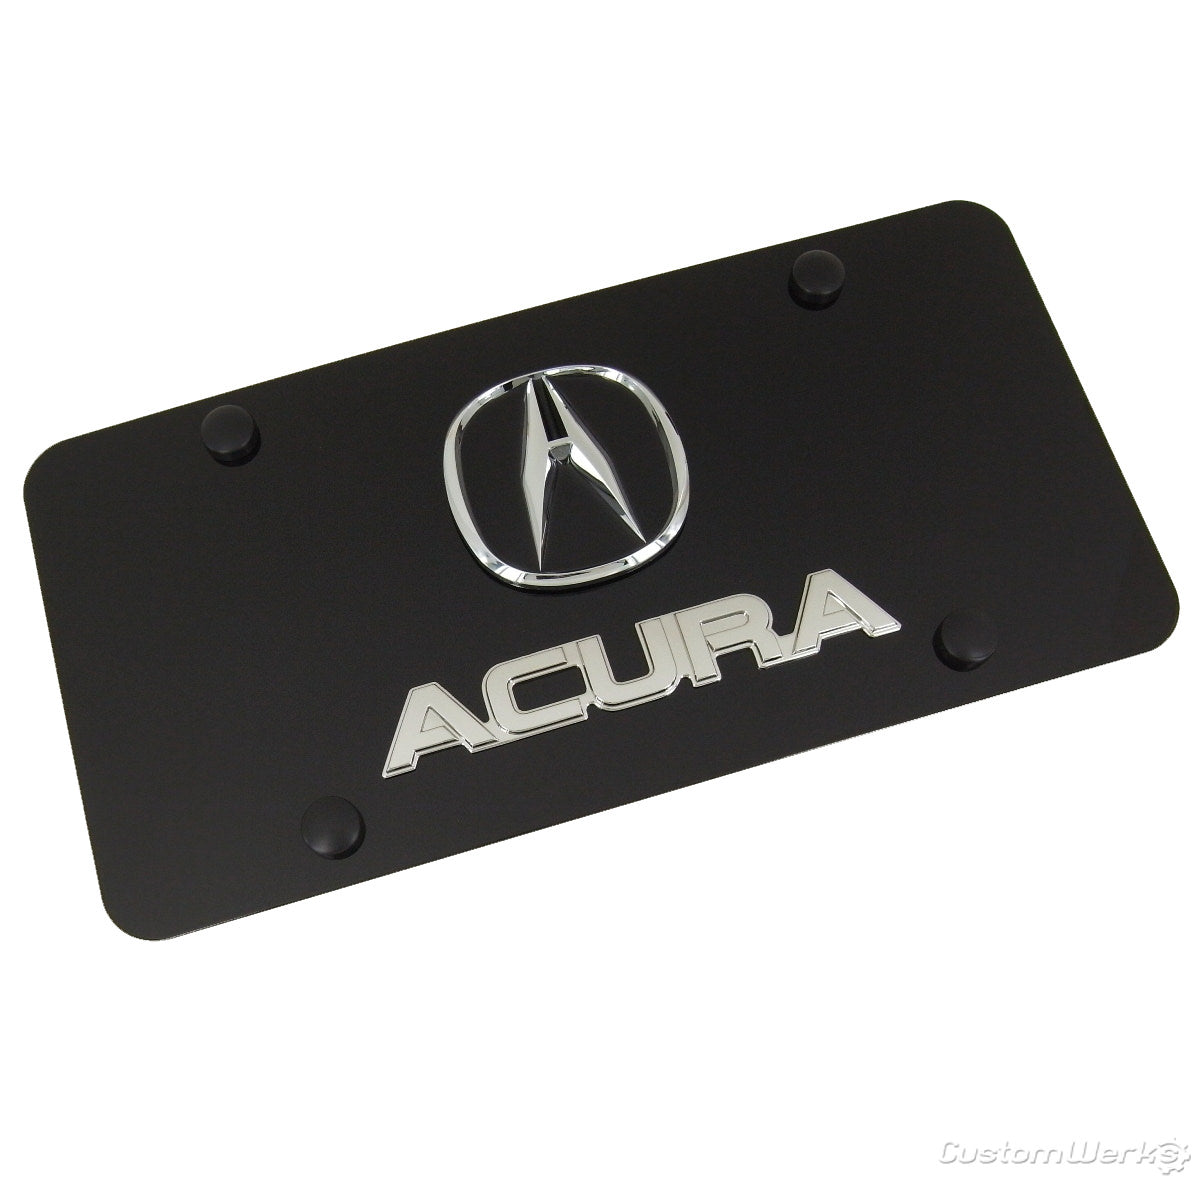 Acura License Plate